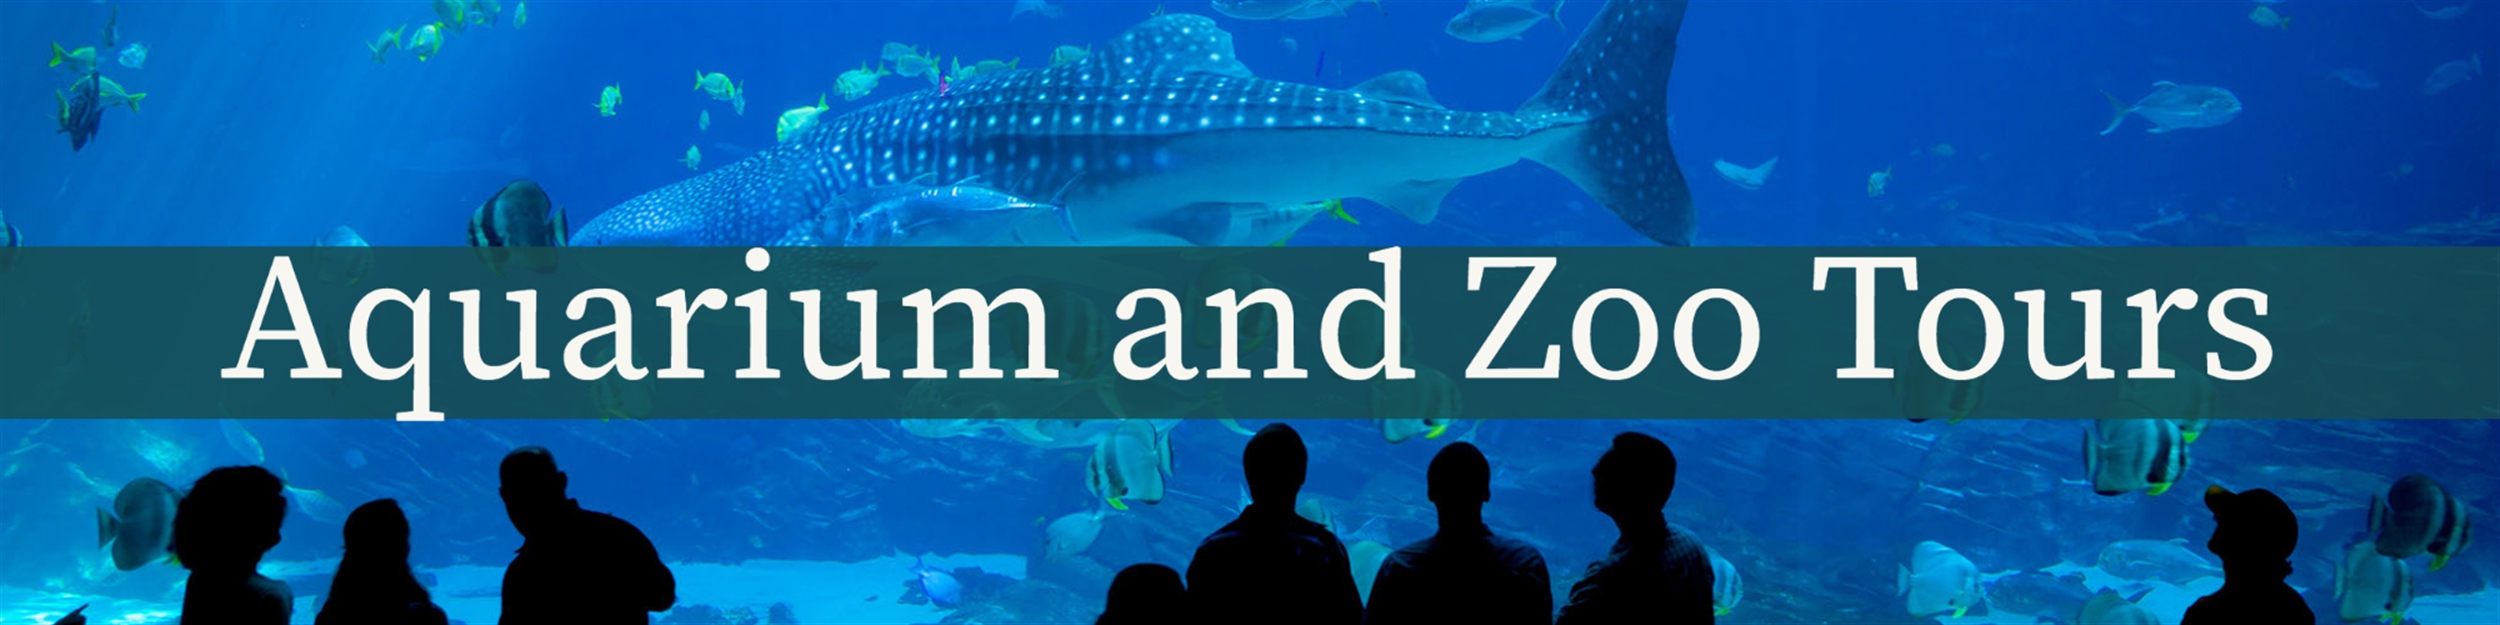 aquarium and zoo tours.jpg